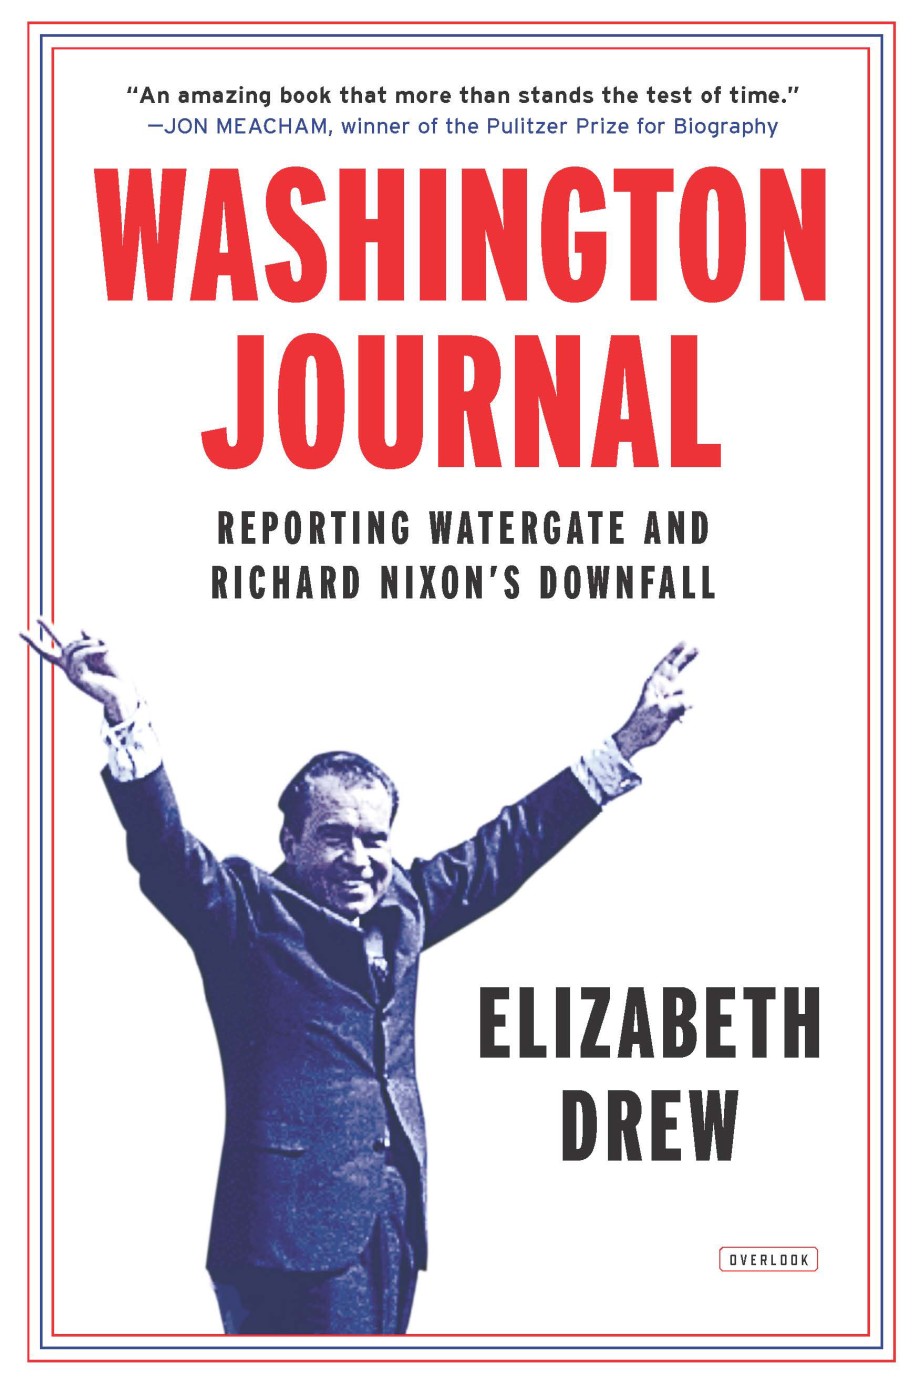 Washington Journal Reporting Watergate and Richard Nixon's Downfall